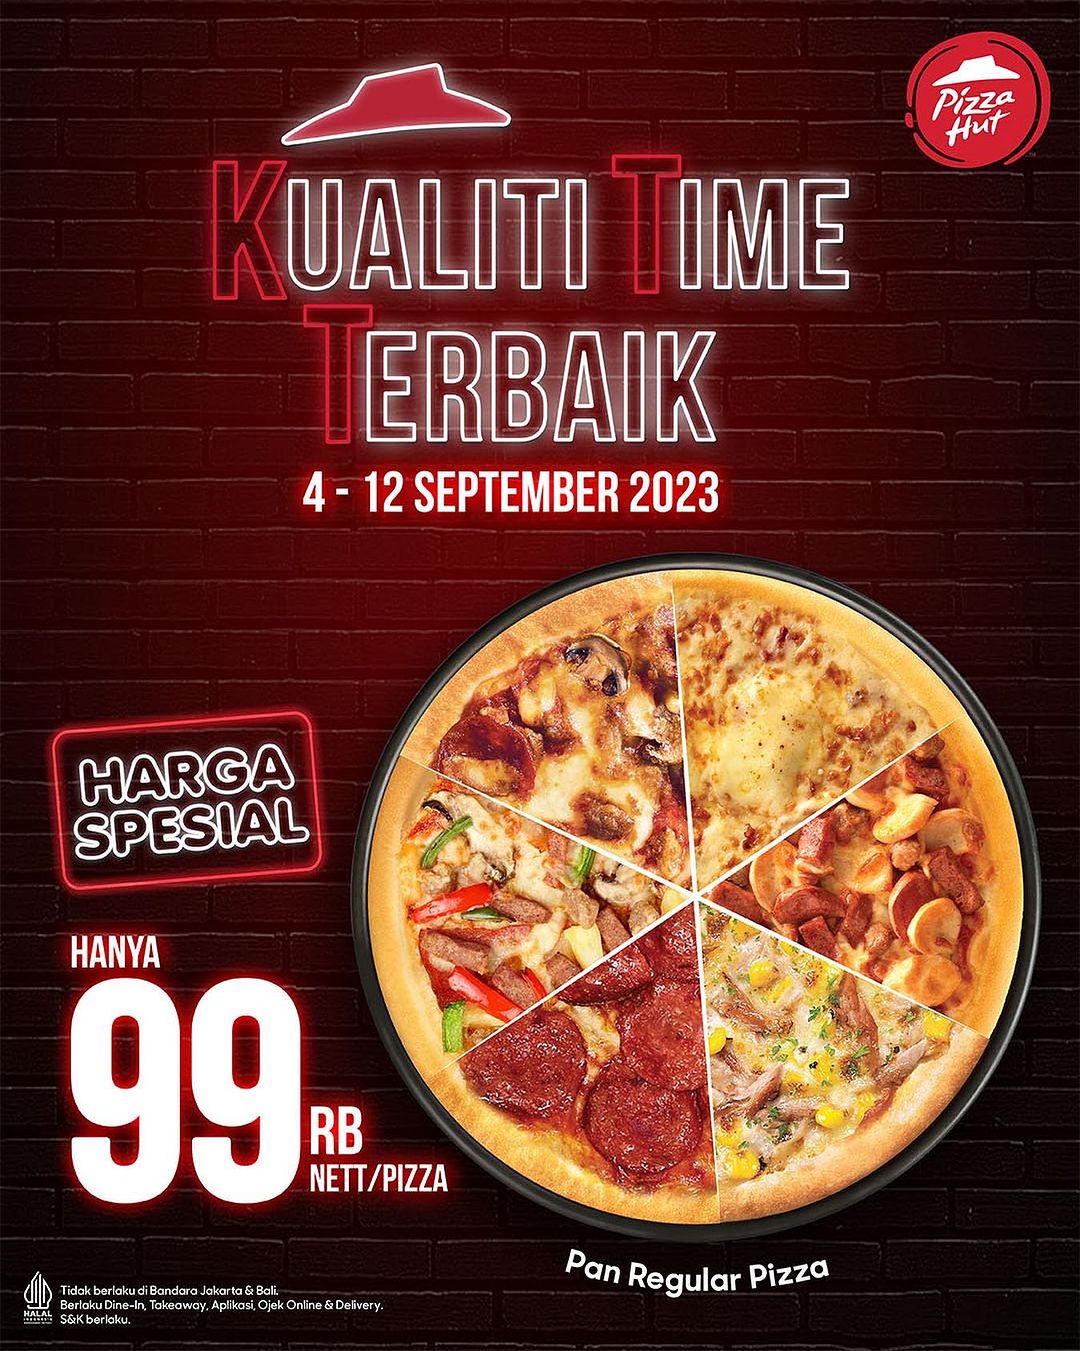 Promo Pizza Hut Harga Spesial Untuk Pan Reguler Pizza Favorit Cuma Rp. 99RB Nett/pizza